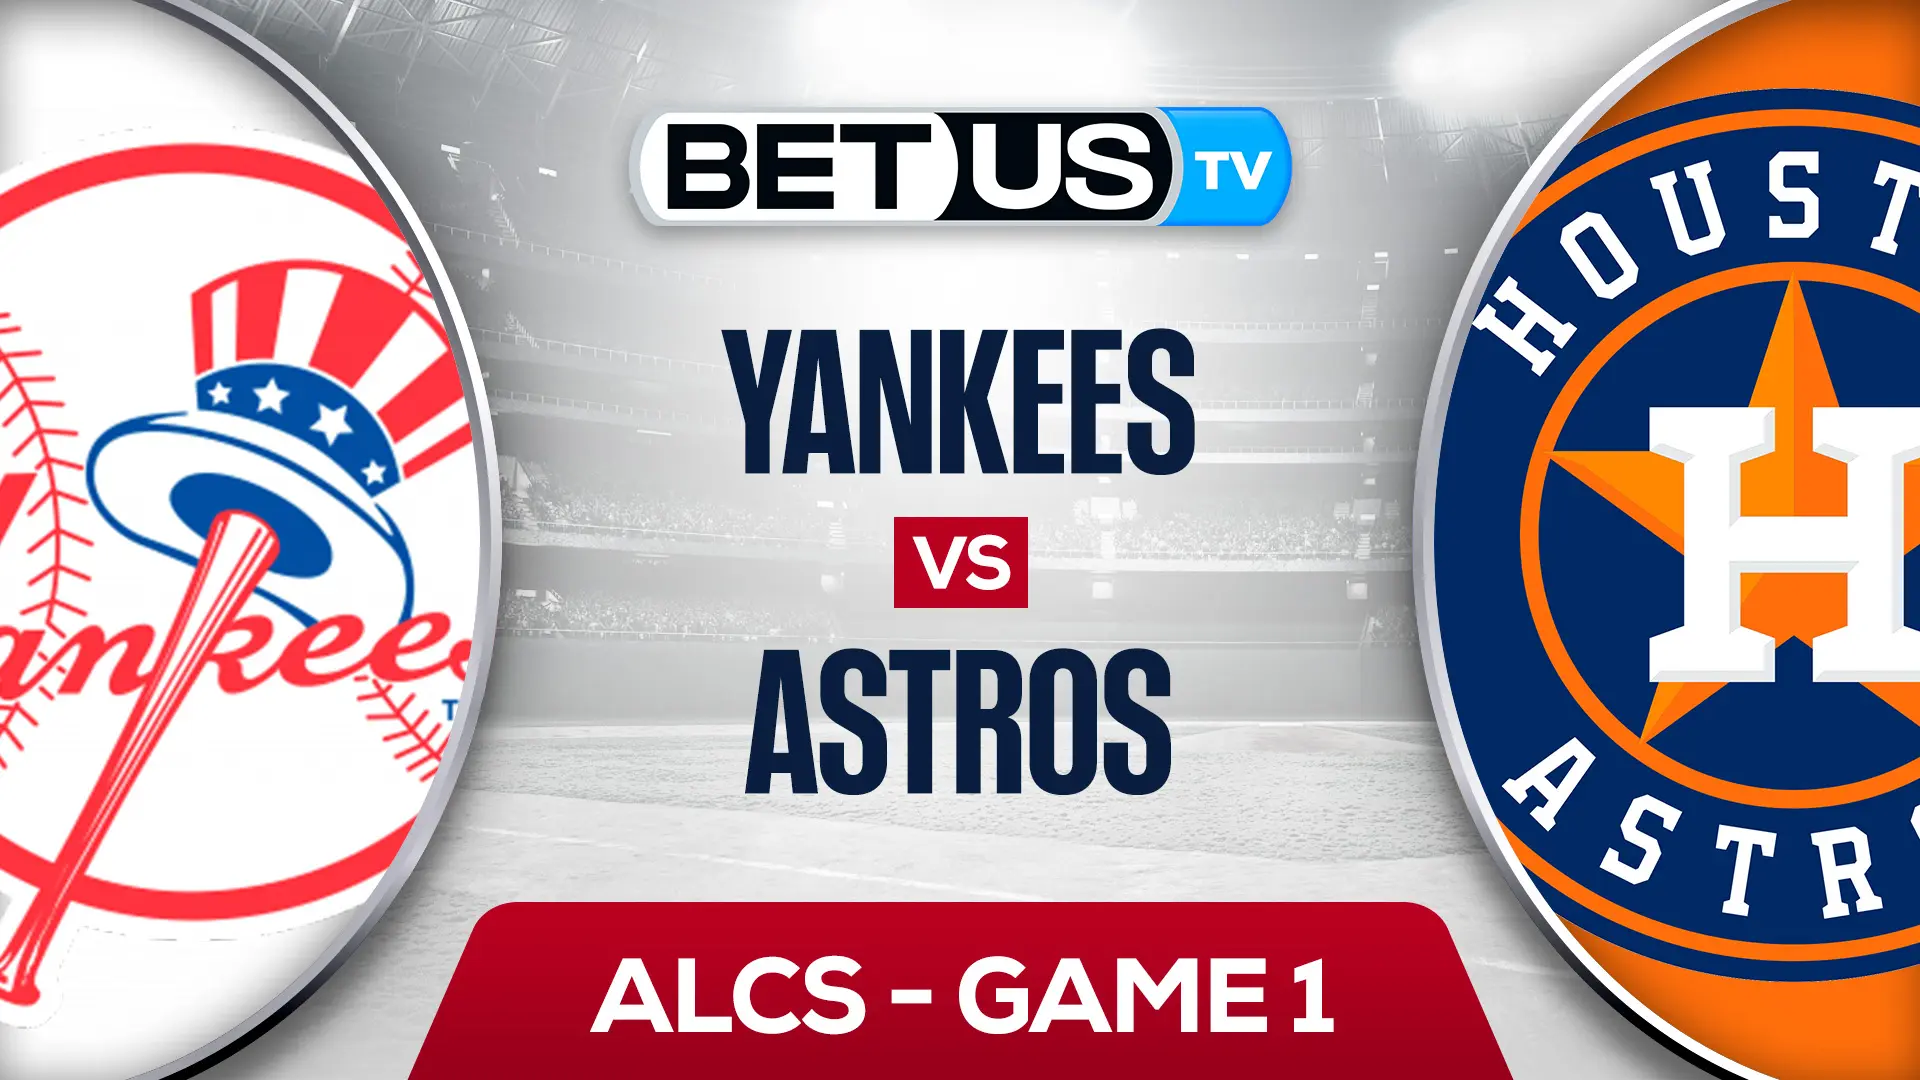 ALCS preview: Houston Astros vs. New York Yankees